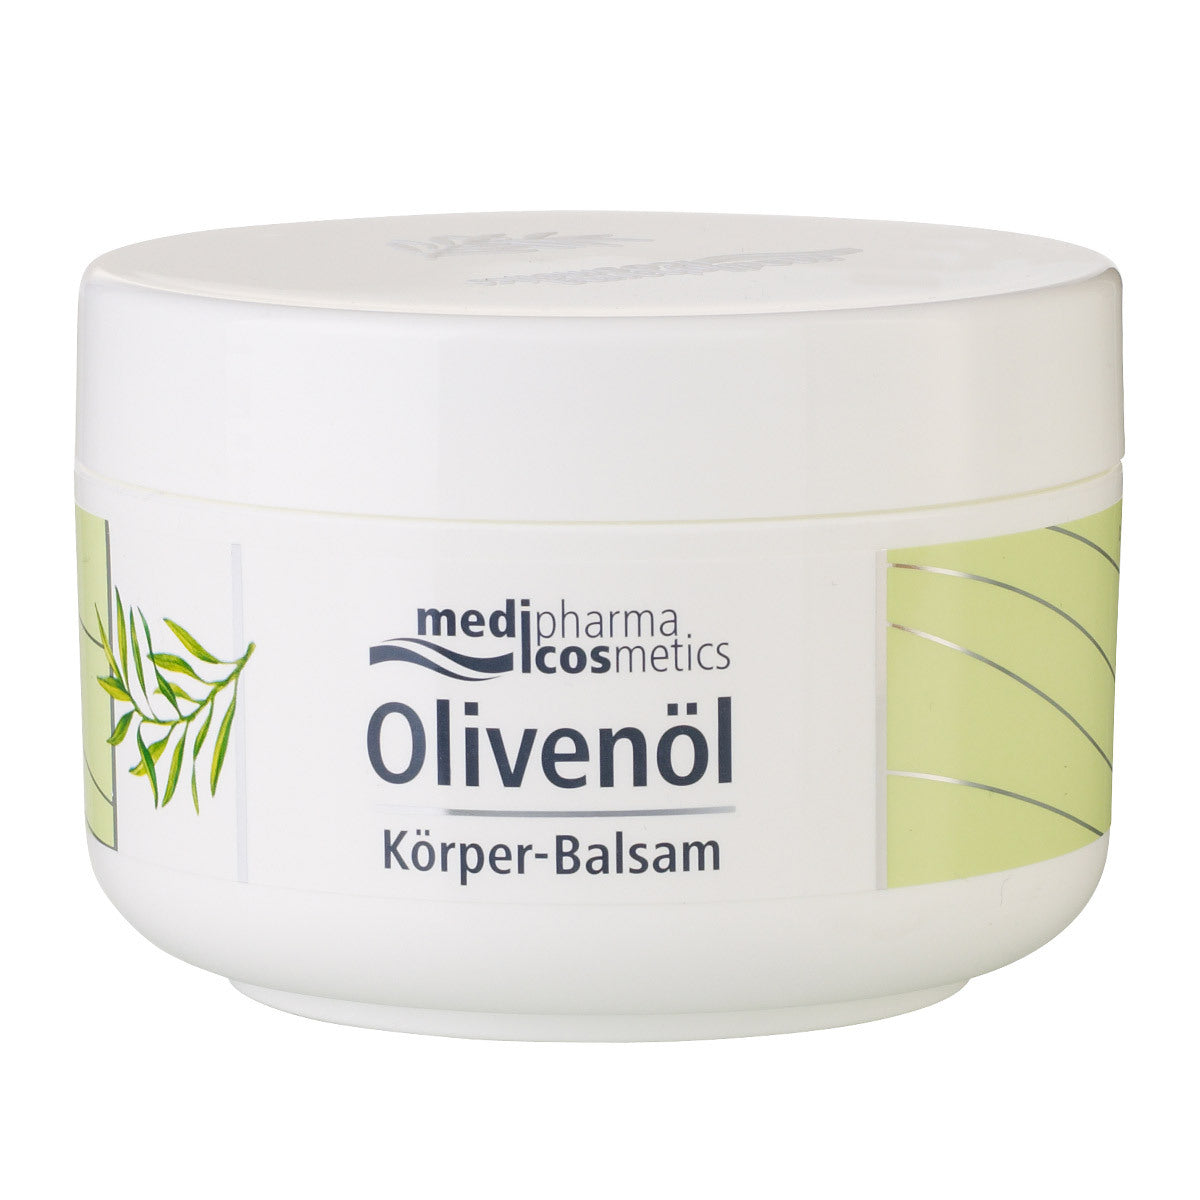 Primary image of Olivenol Body Balm